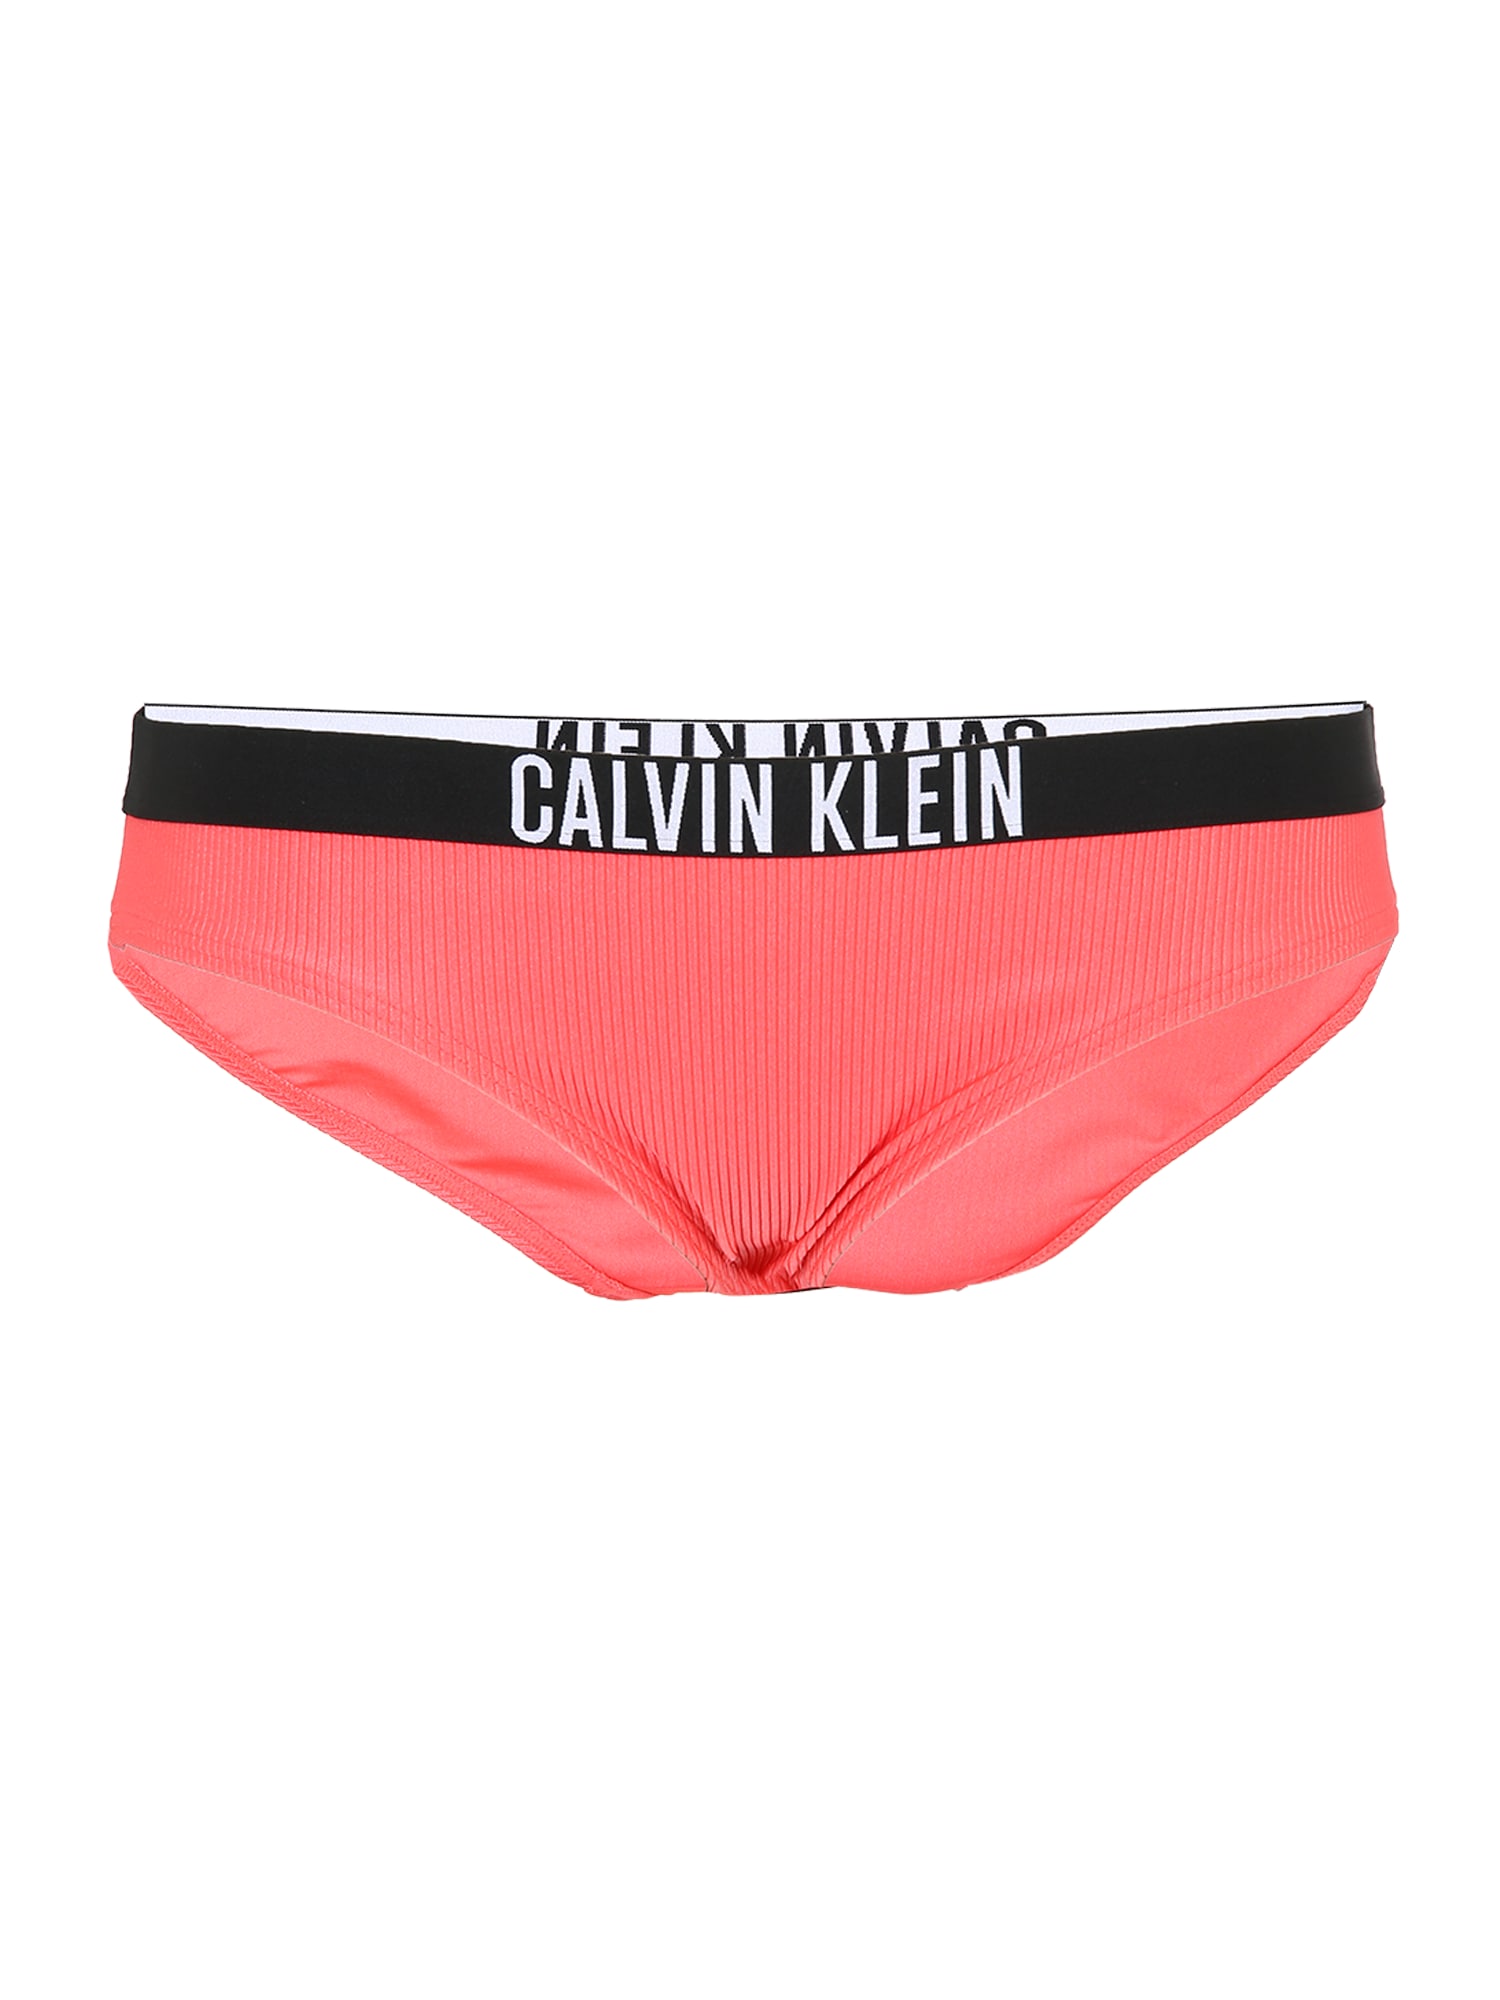 Calvin Klein Swimwear Bikinio kelnaitės abrikosų spalva / juoda / balta